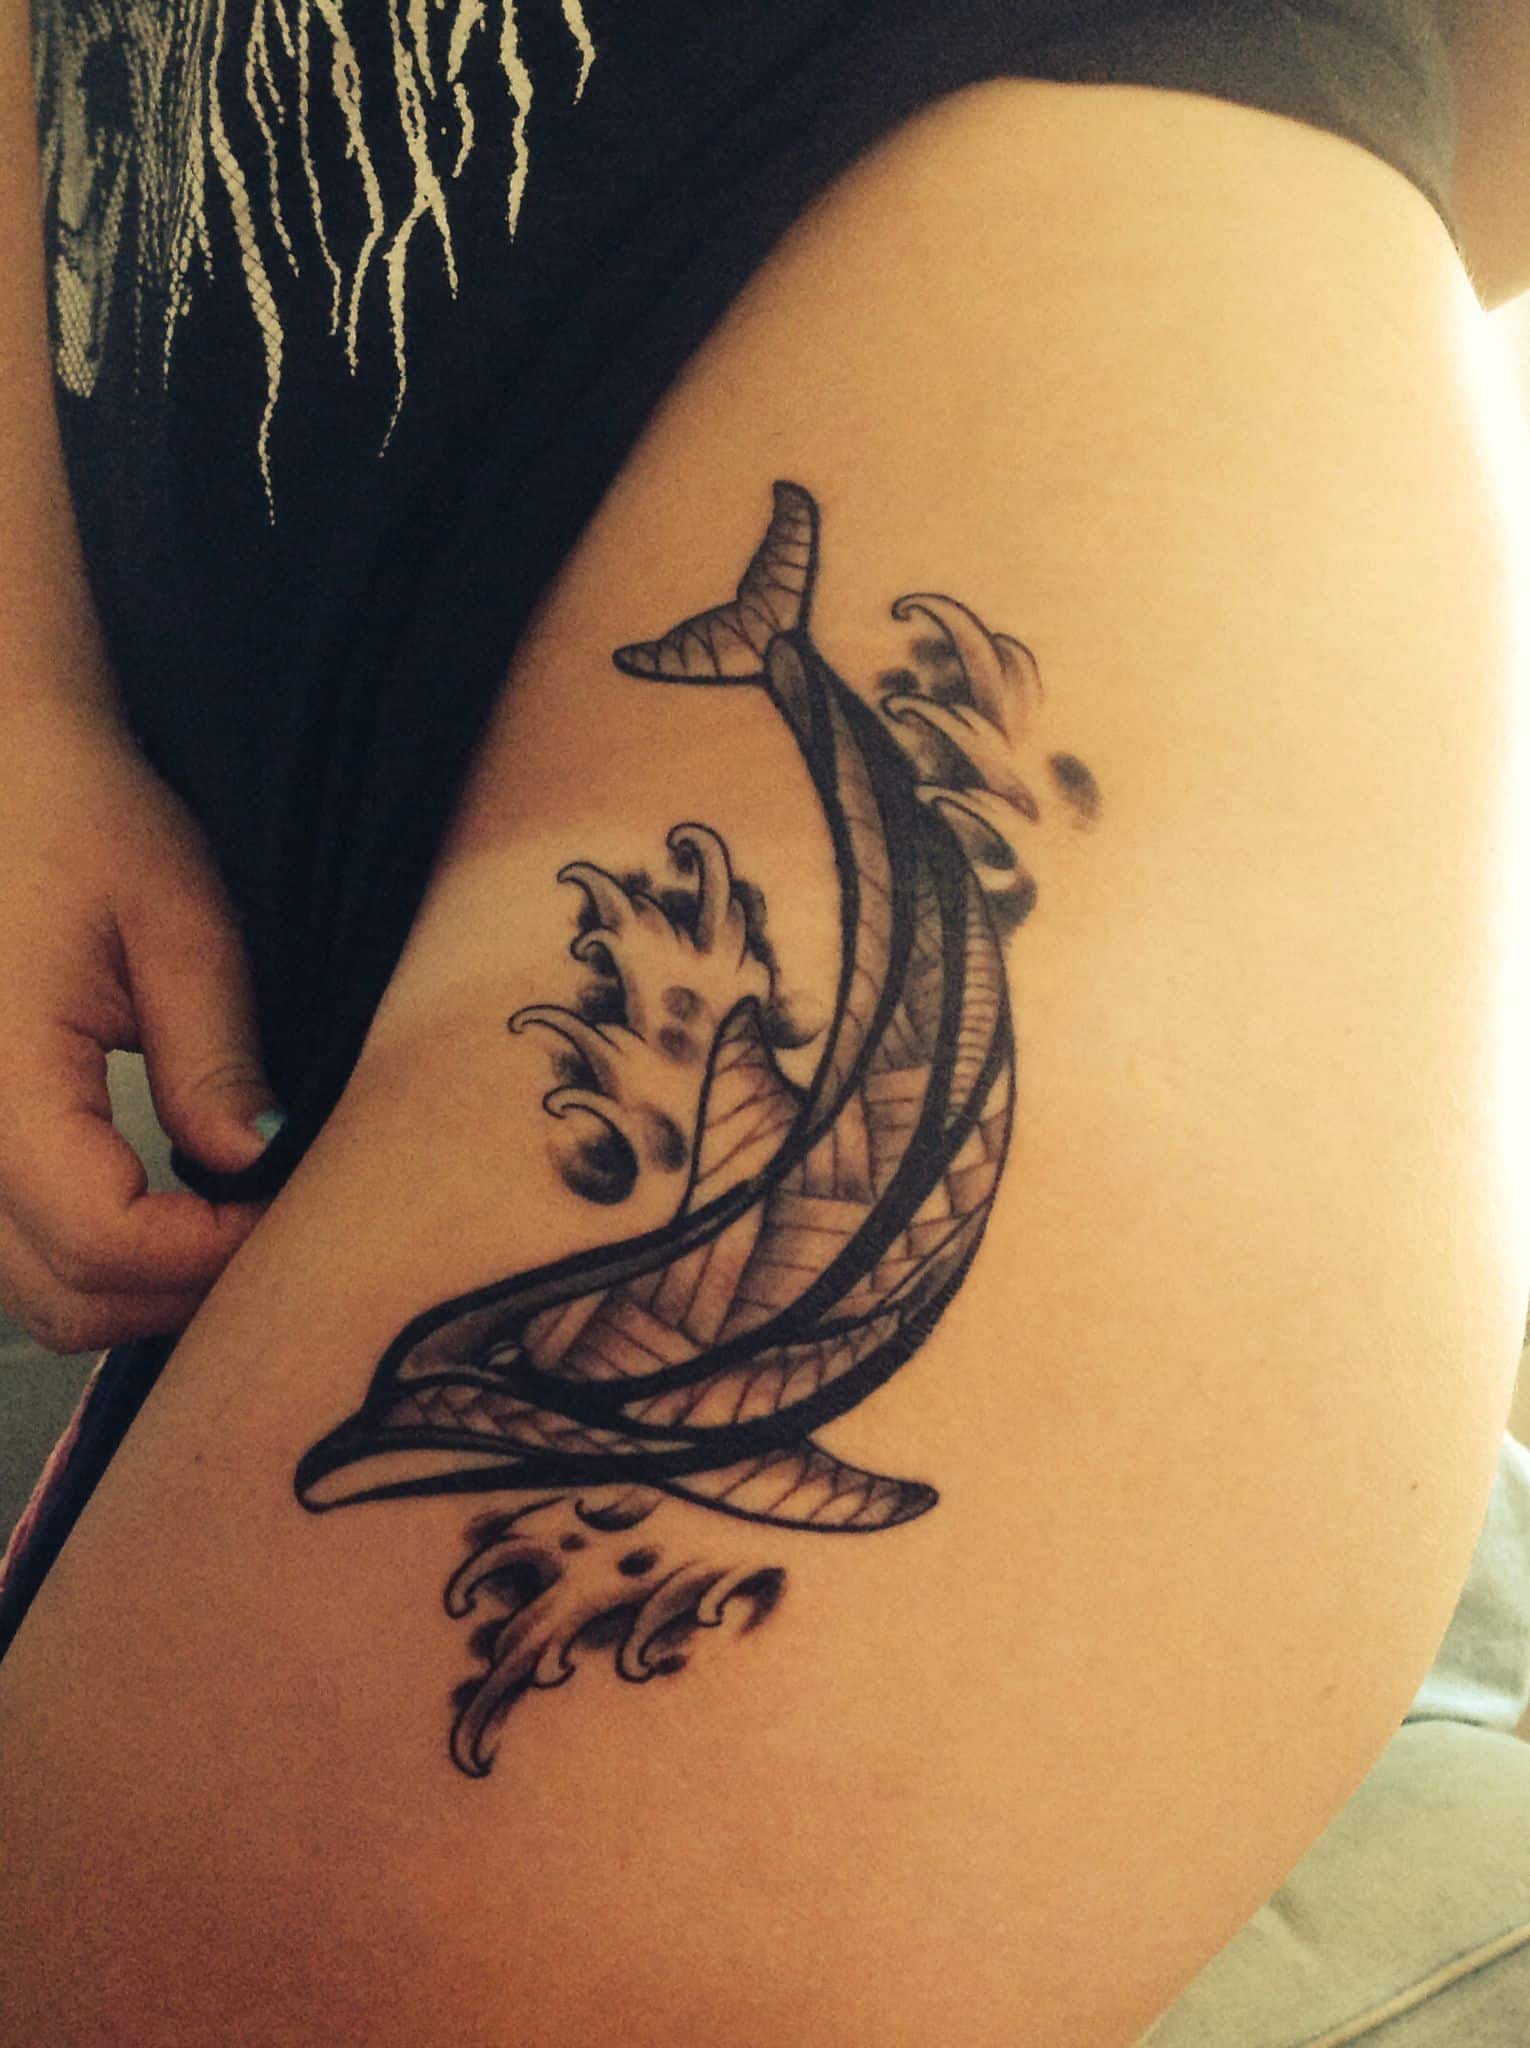 Dolphin tattoo ideas